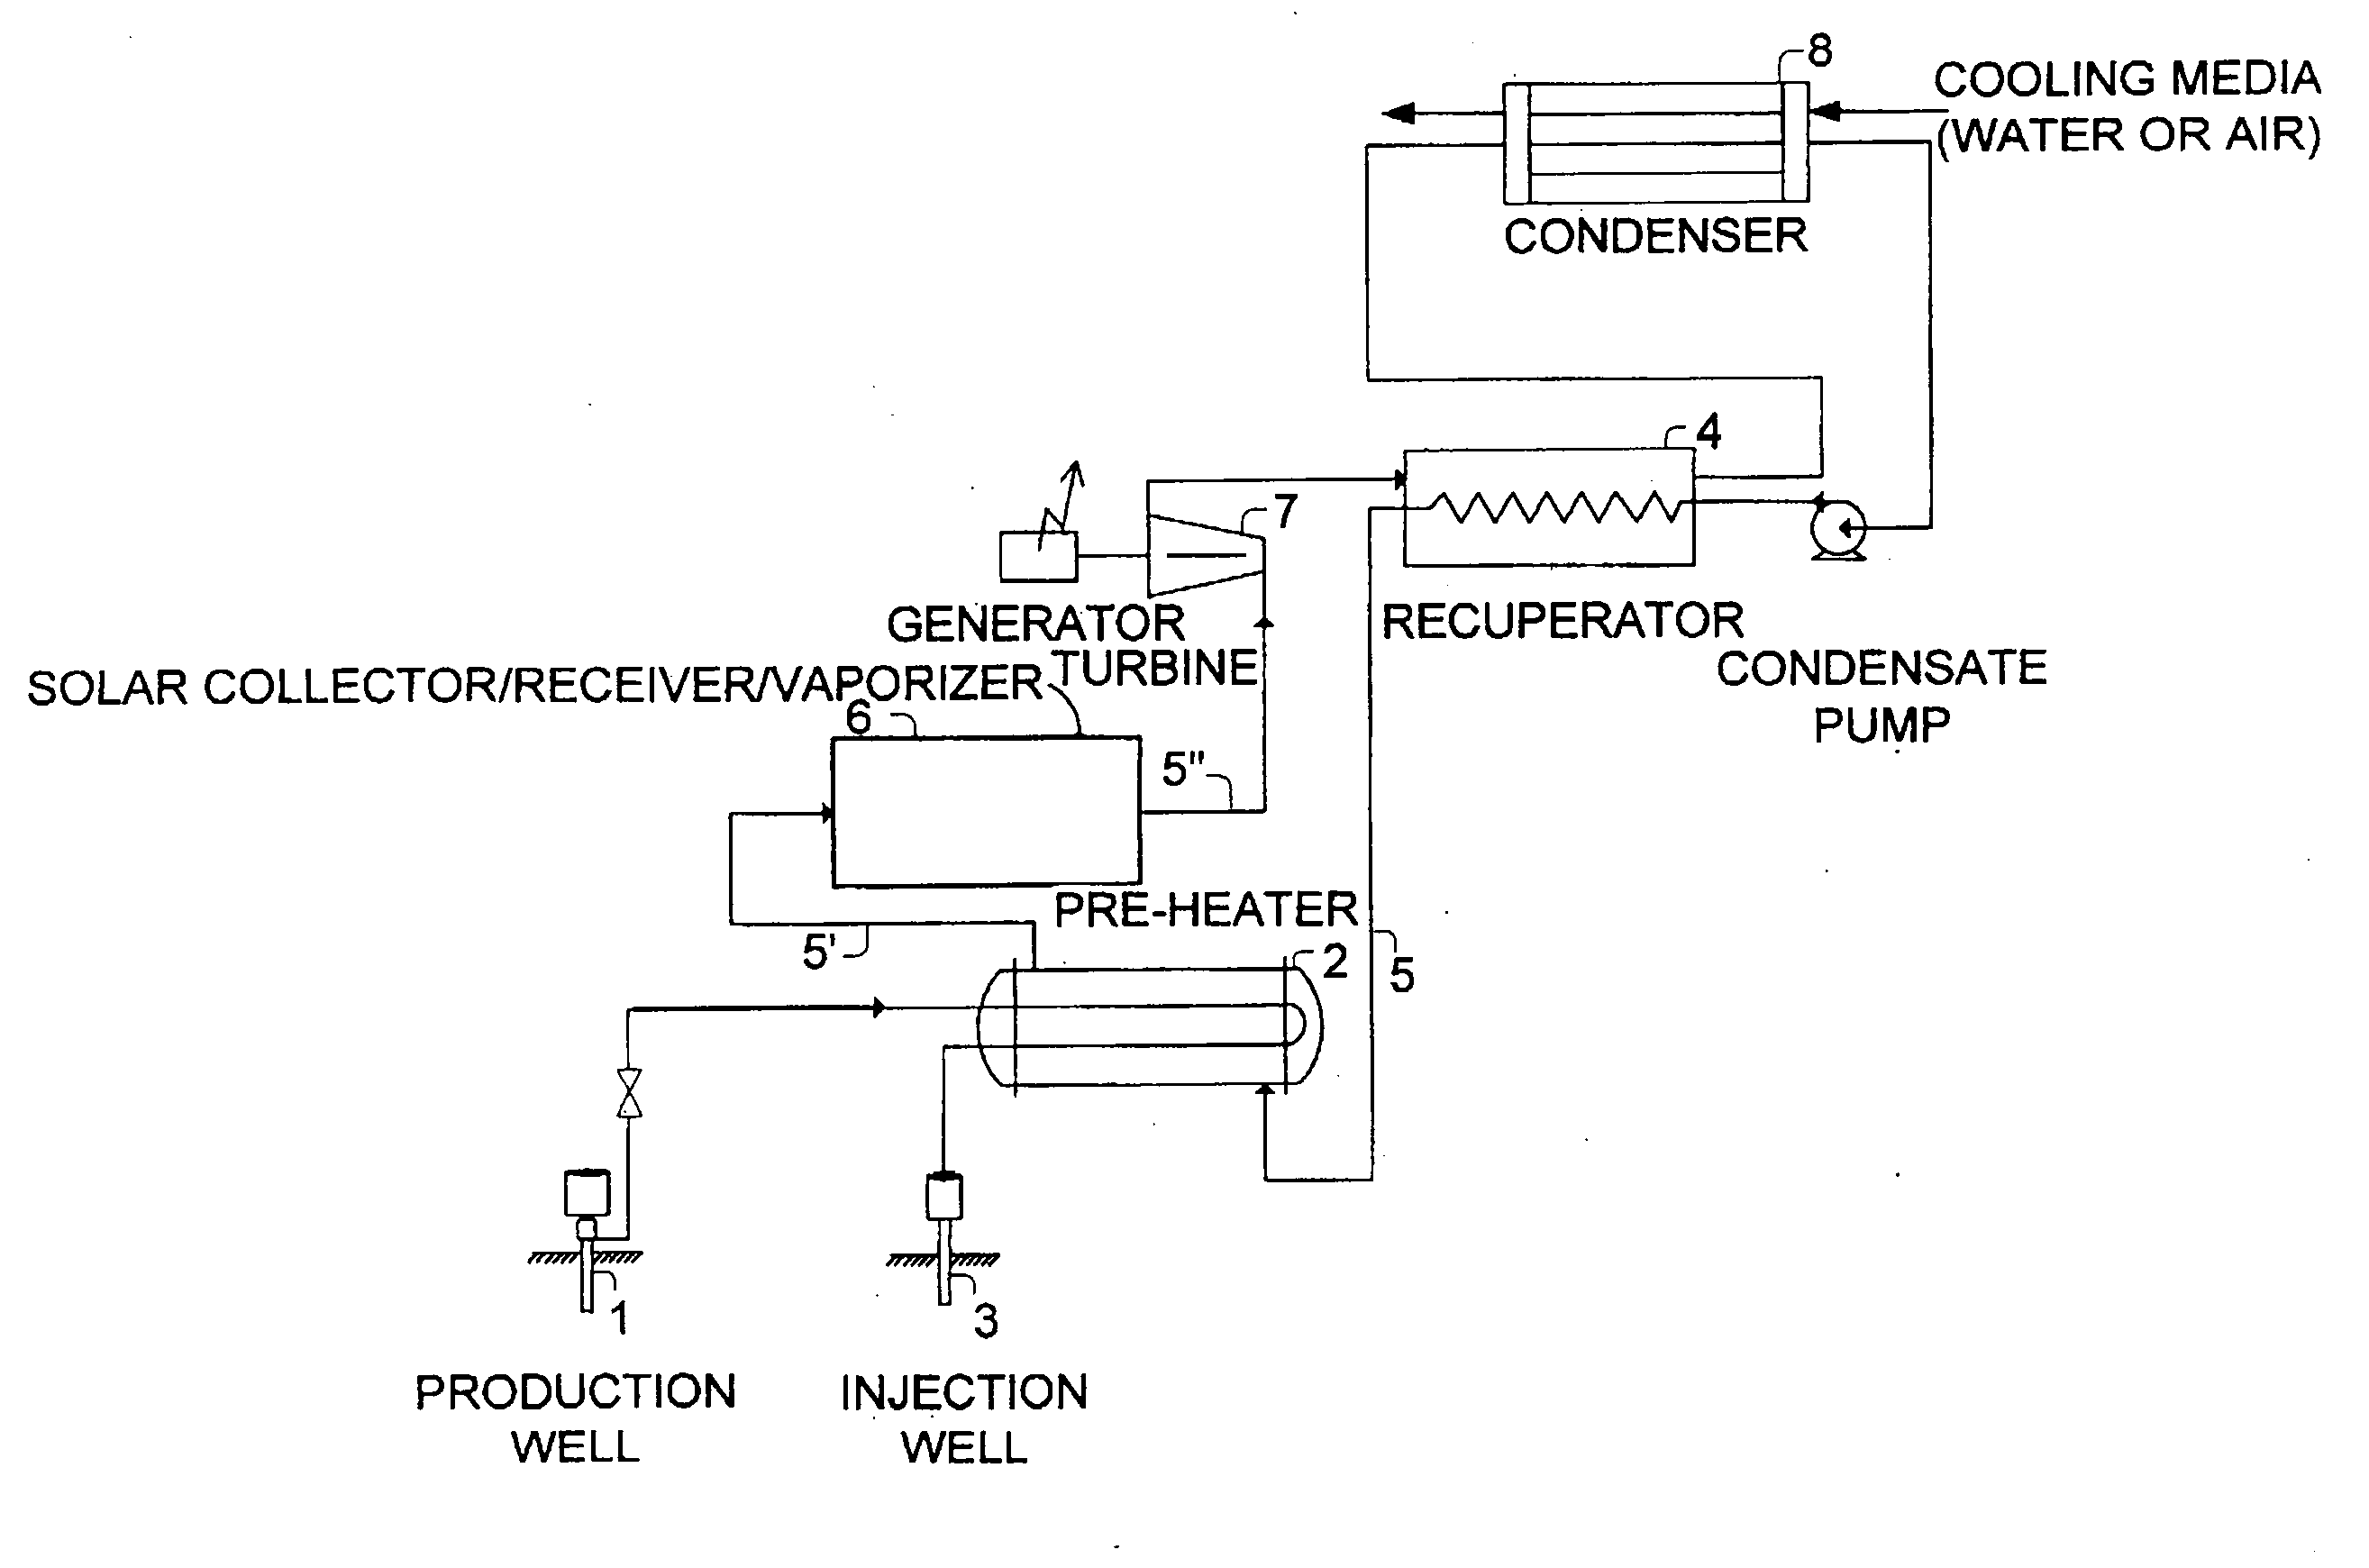 Multi-heat source power plant